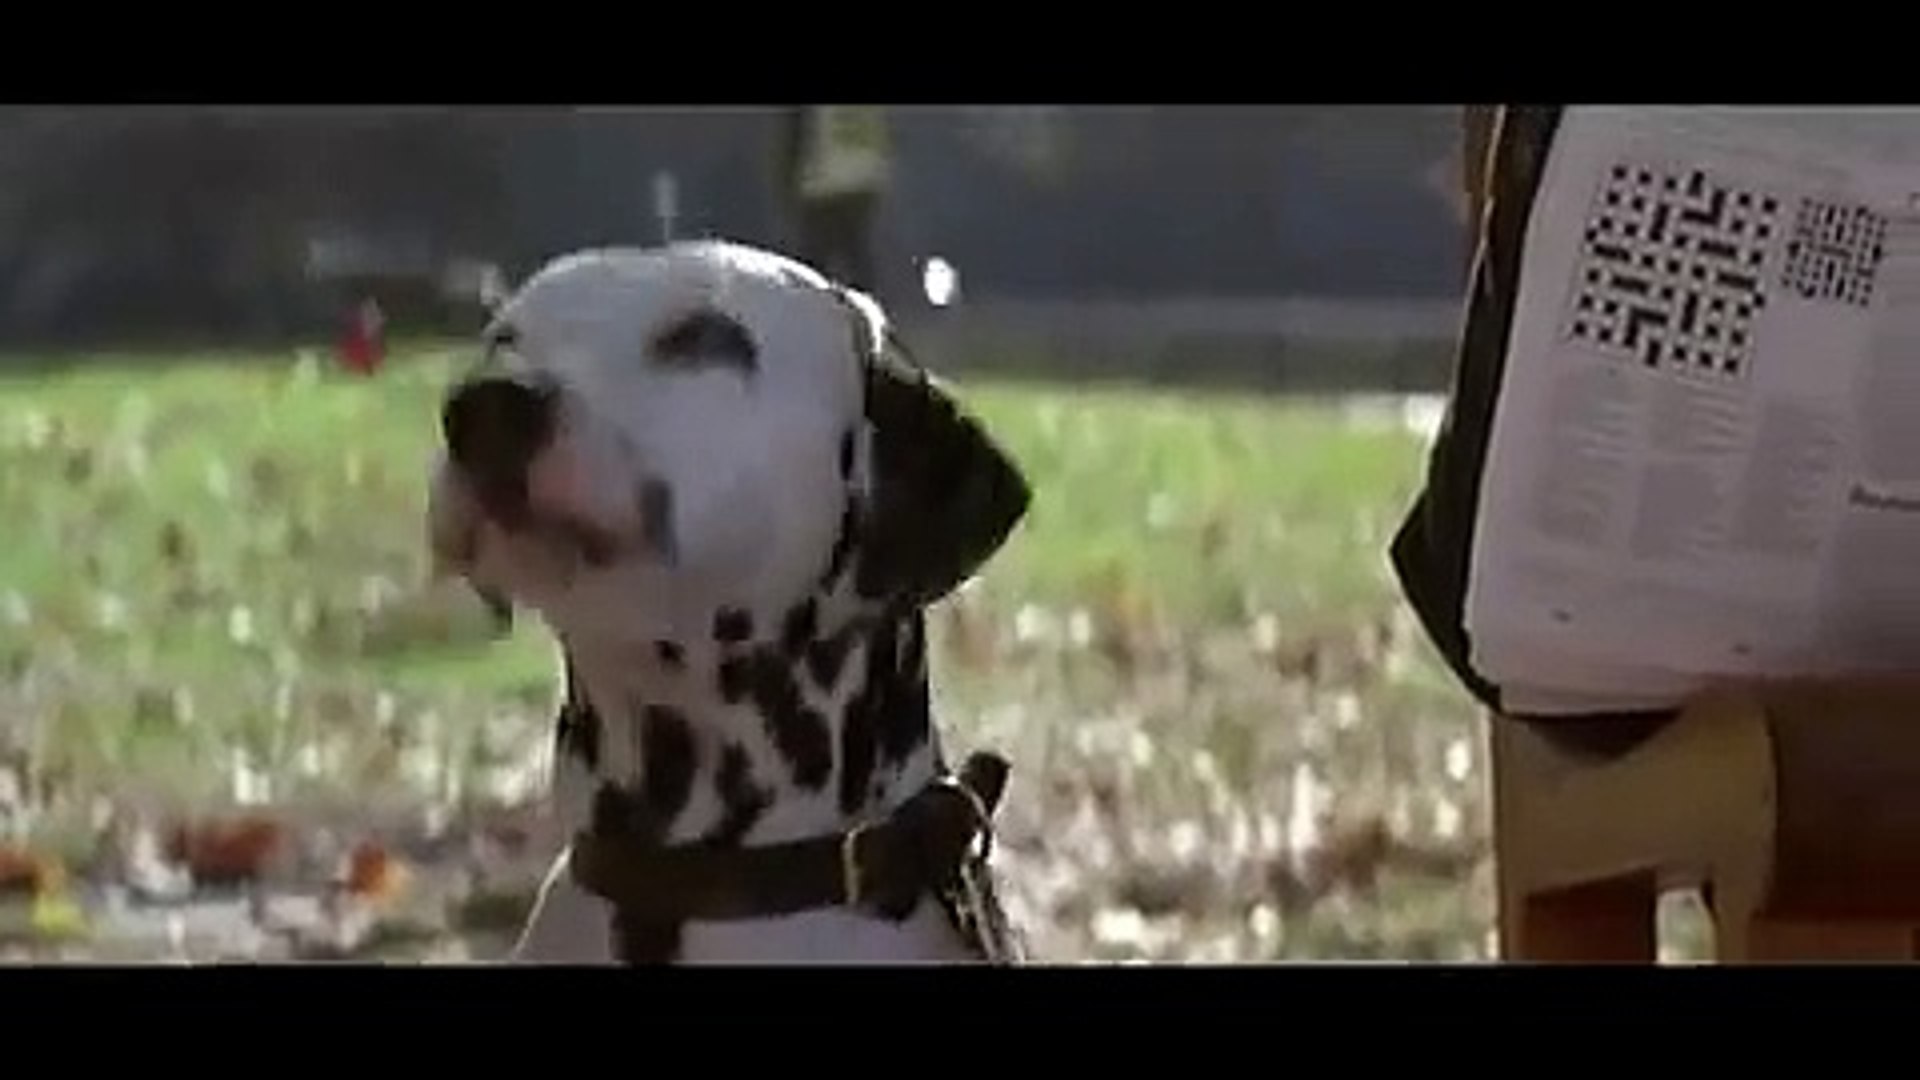 Disneycember - 101 Dalmatians (1996)-NQ3YZK2q9uU - video Dailymotion